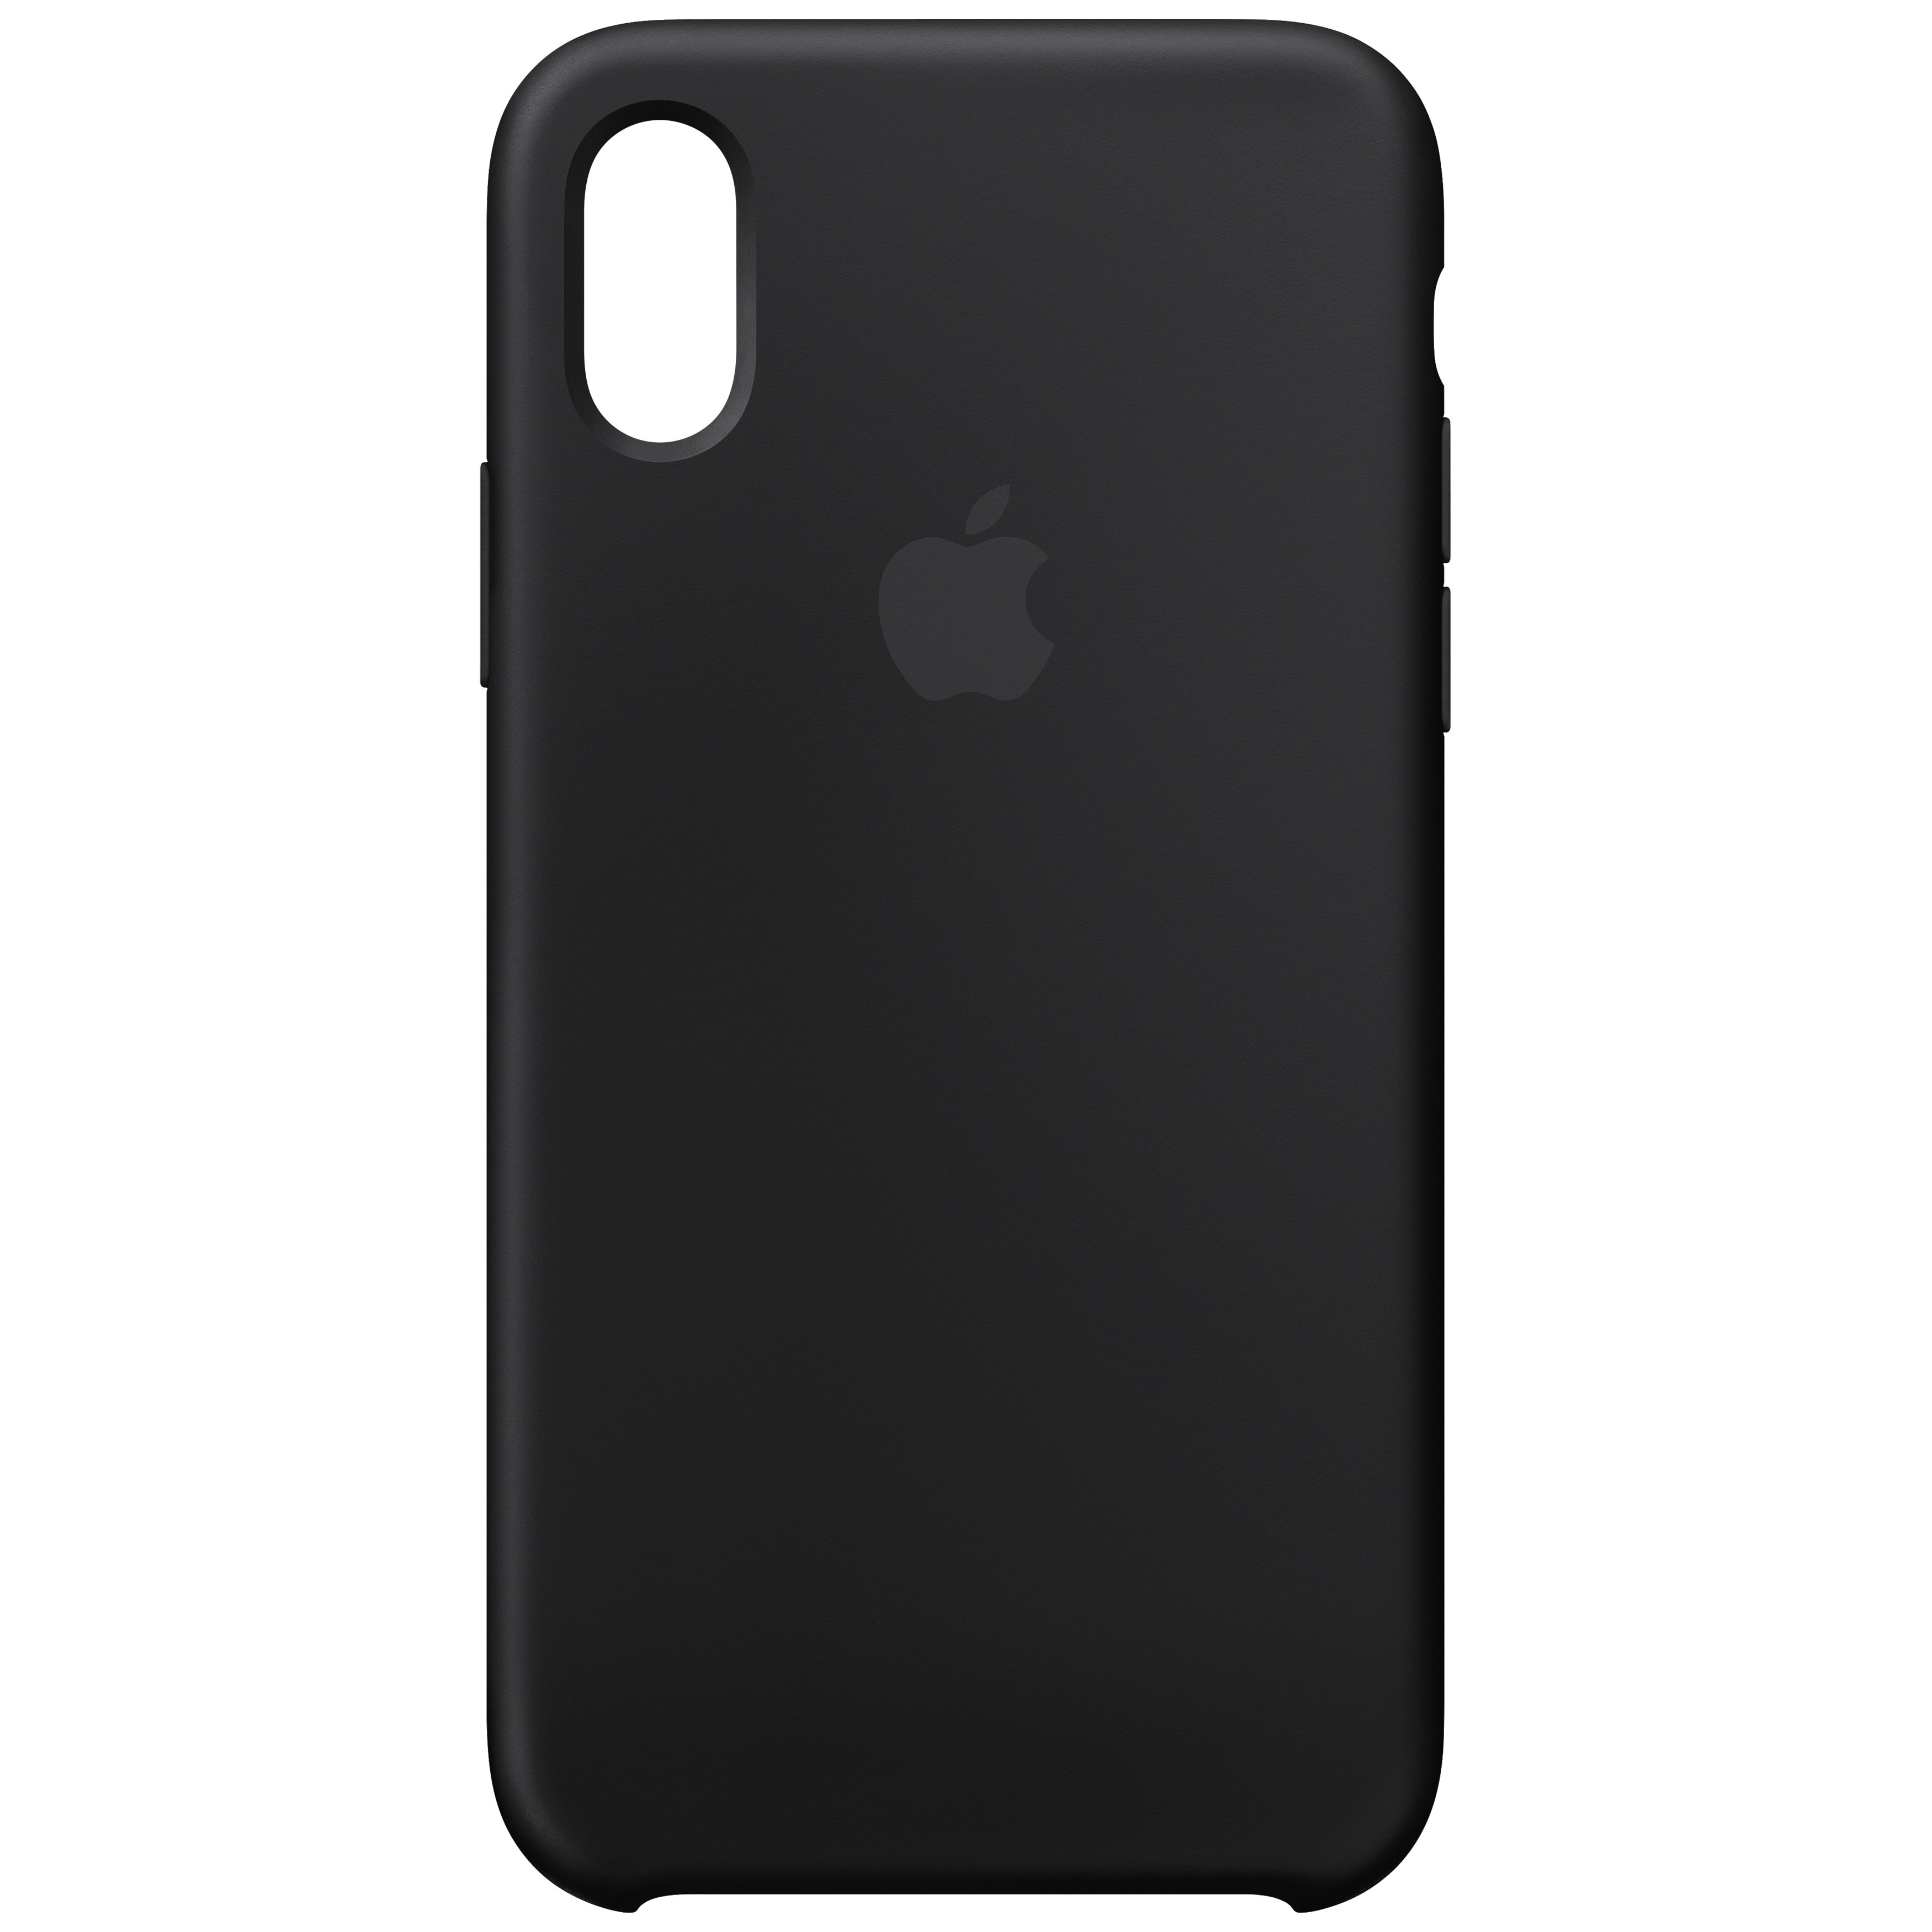 iPhone Xs silikondeksel (sort) - Deksler og etui til mobiltelefon - Elkjøp